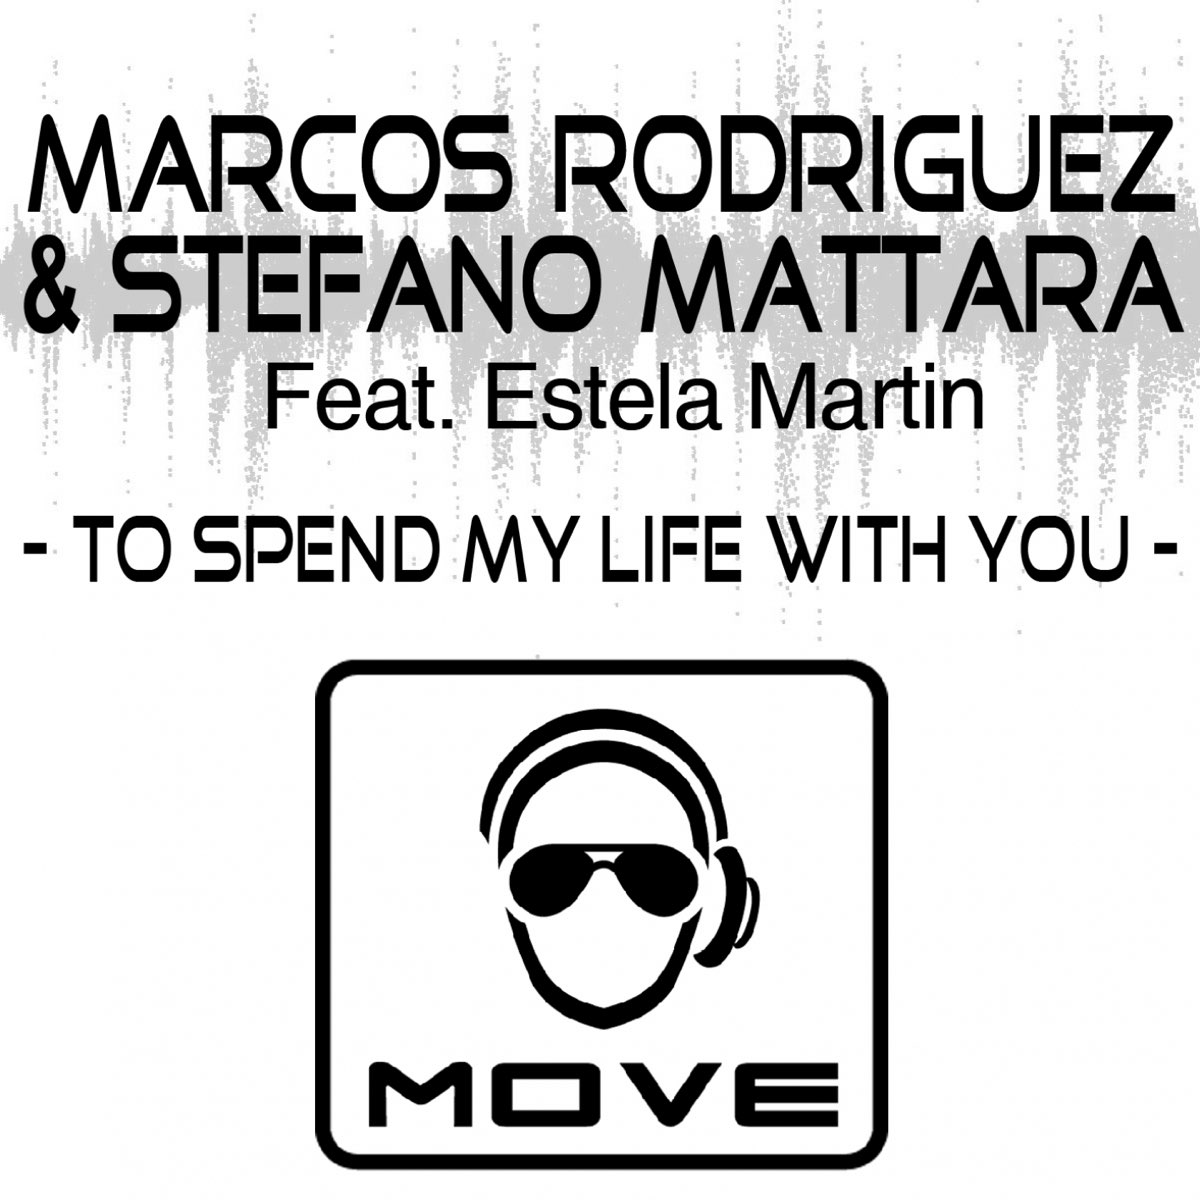 Mattara send the message. Marcel Rodriguez solo. Spending my life